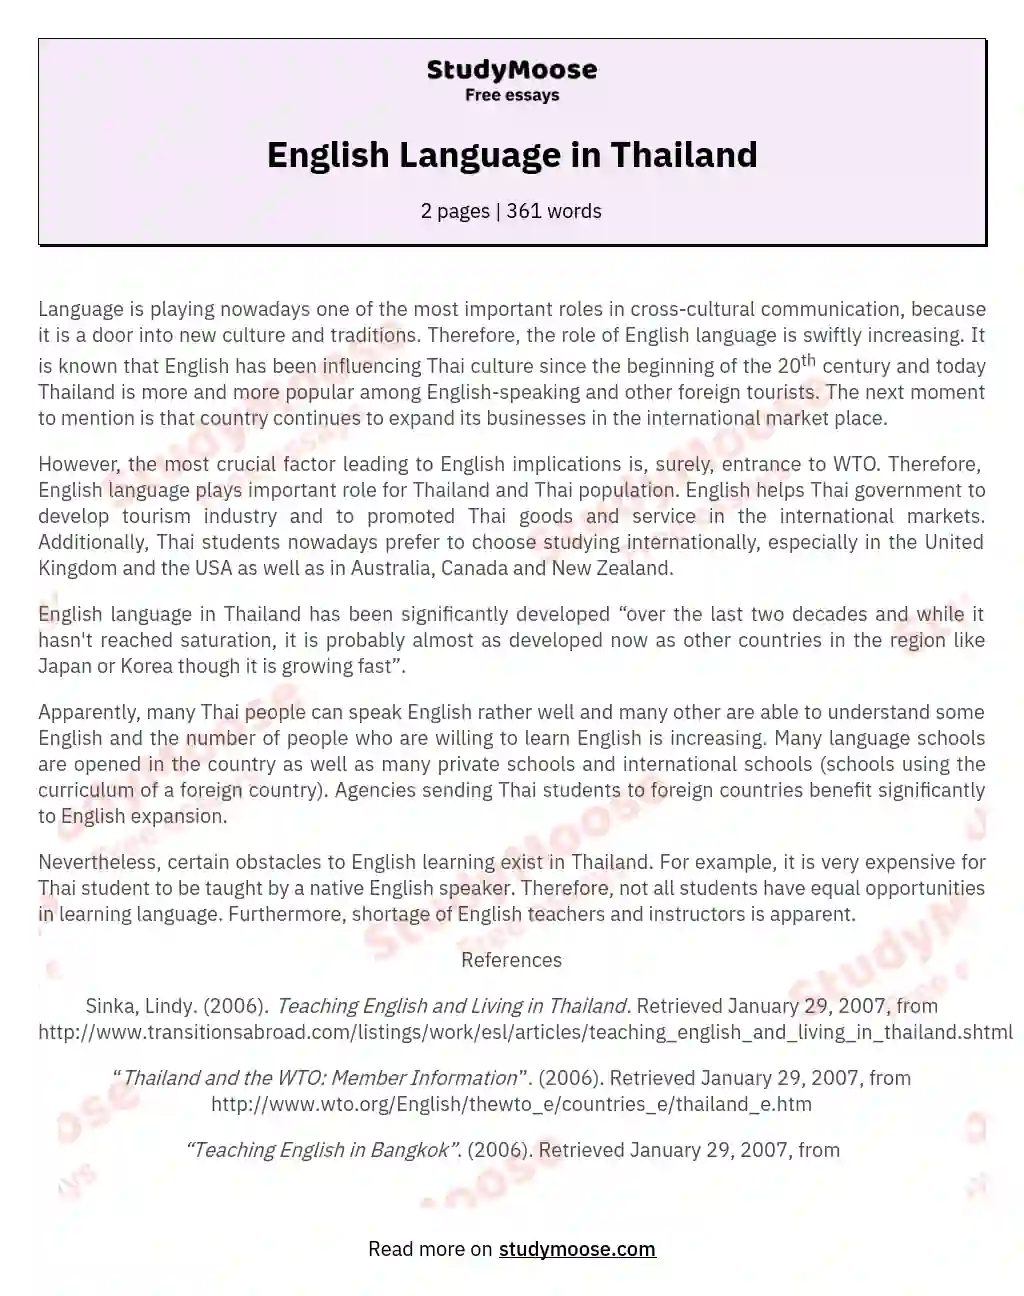 English Language in Thailand essay